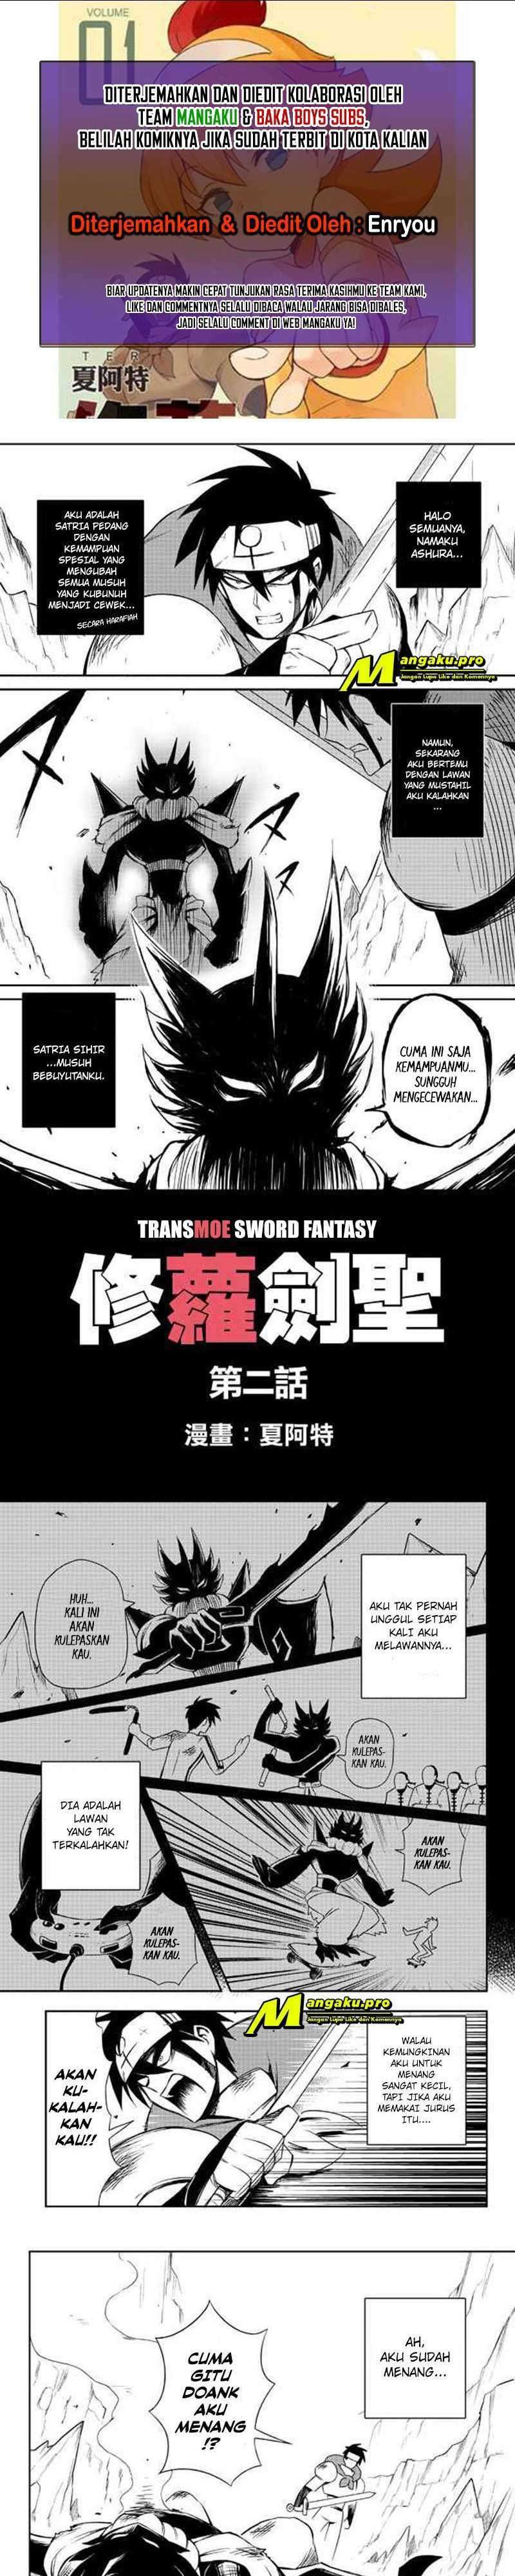 Transmoe Sword Fantasy Chapter 02